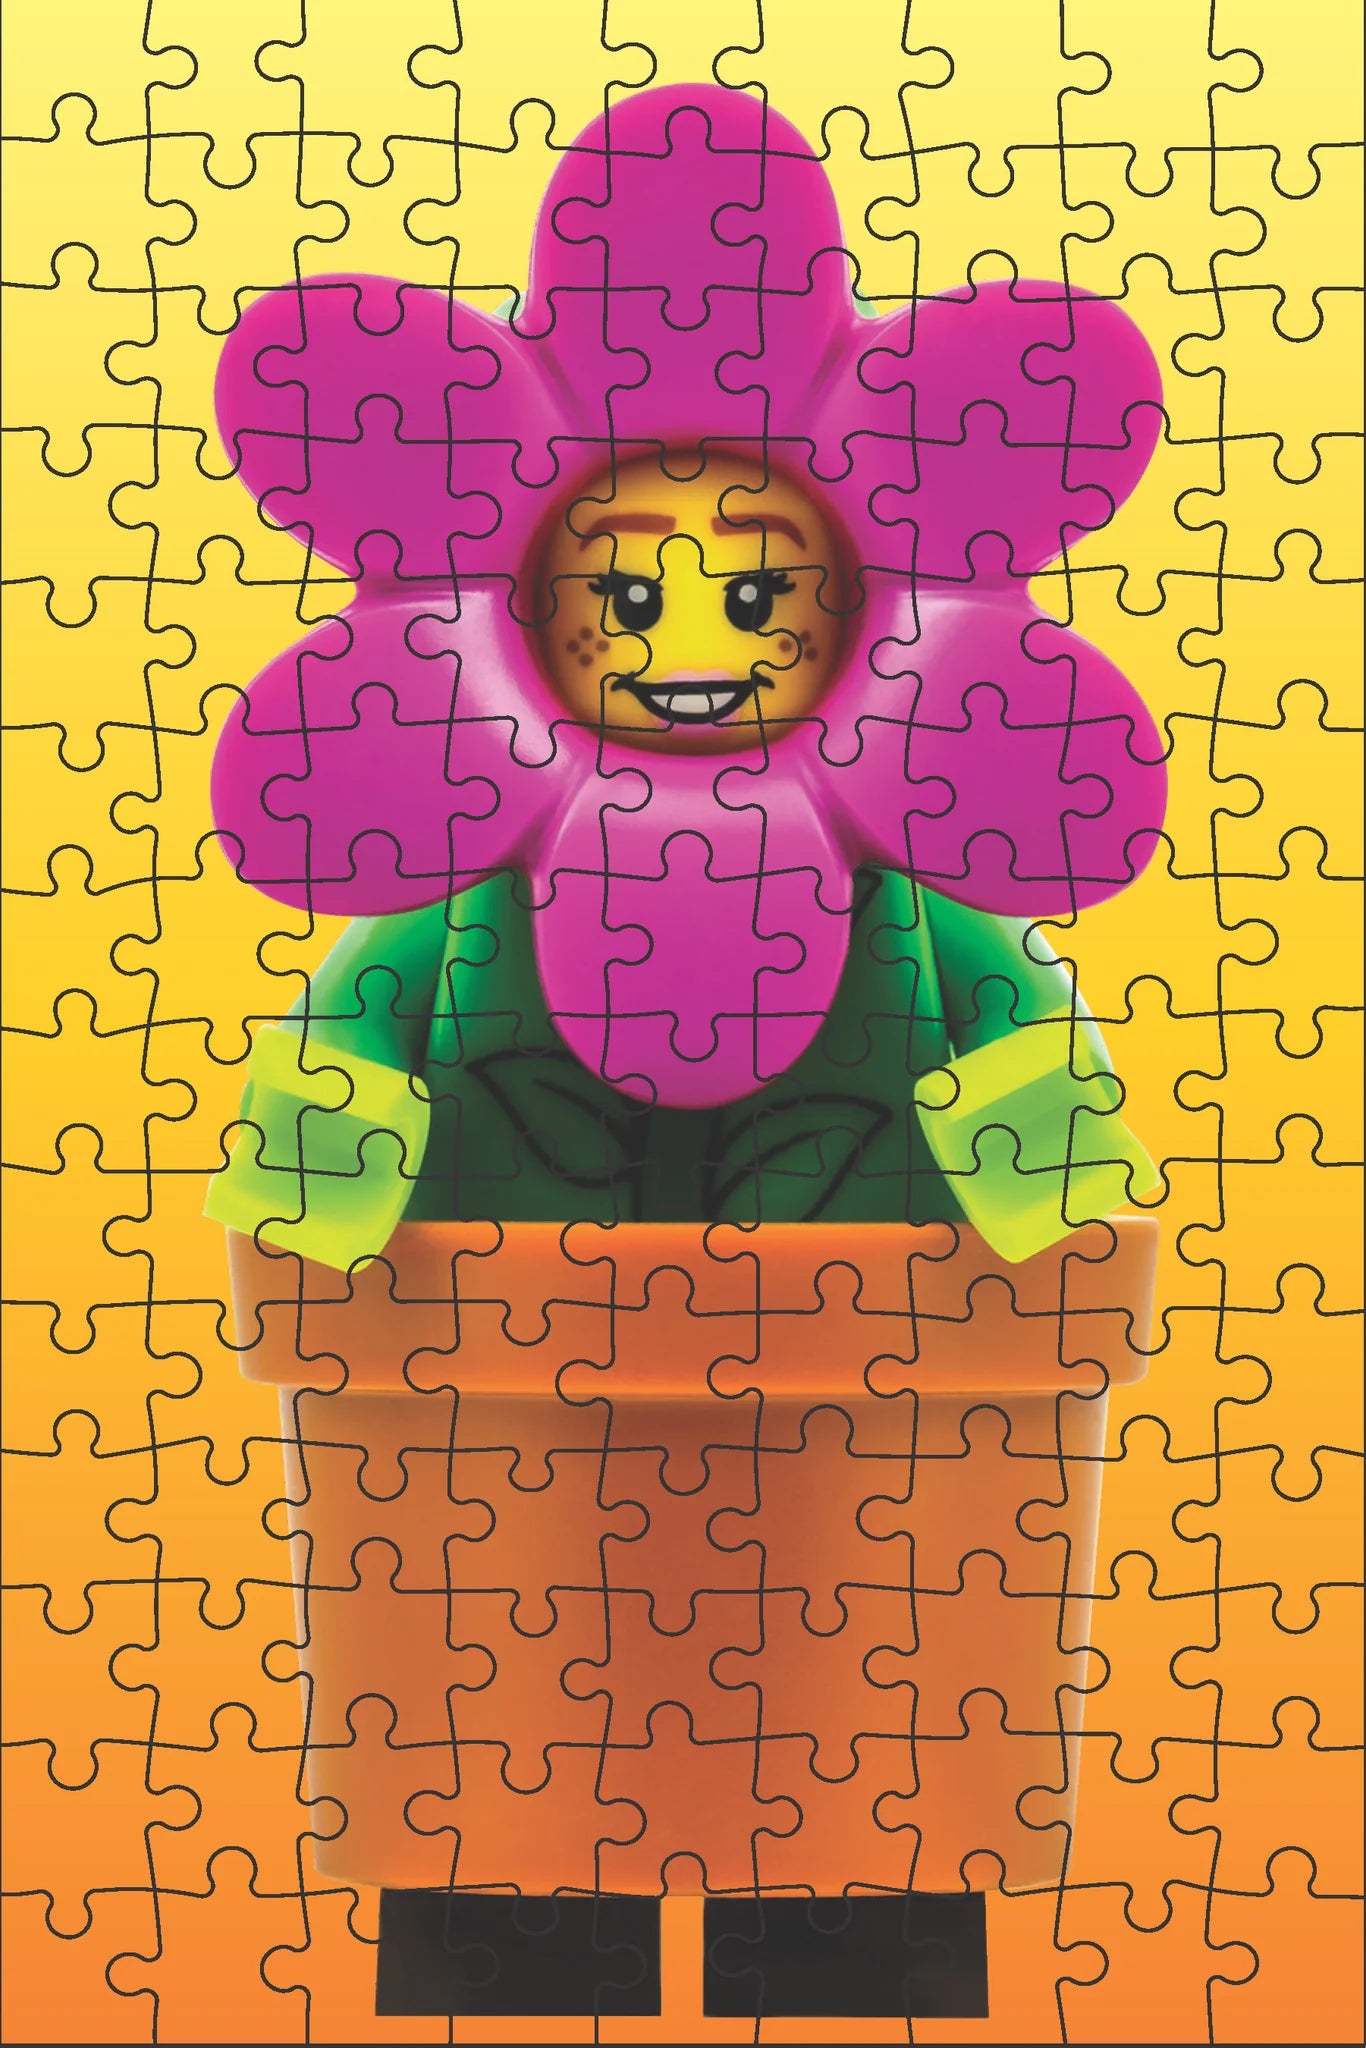 LEGO Mystery Minifigure Mini Puzzle (Red Edition)